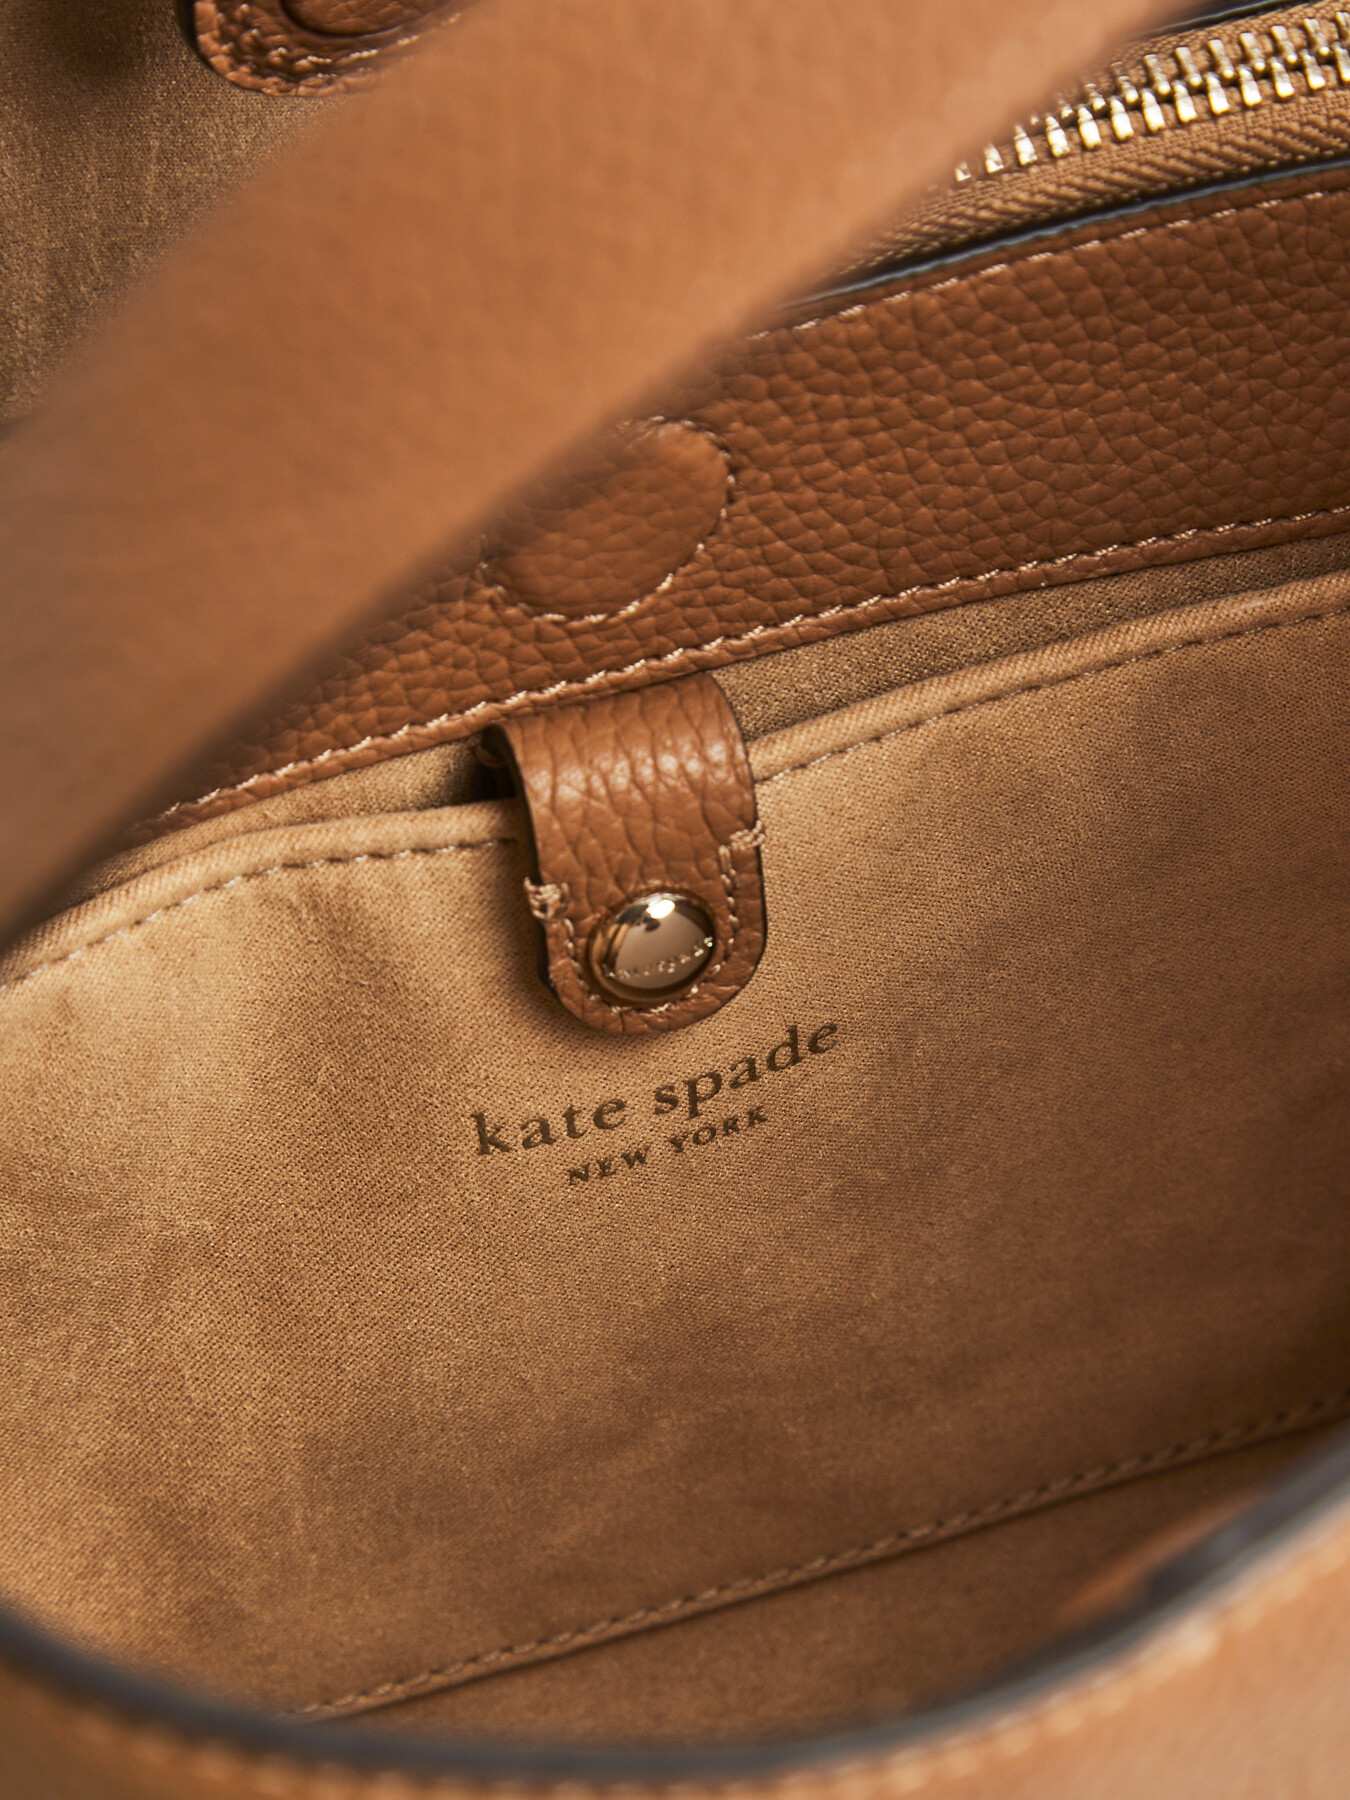 Deals on Handbags & Purses for Women | Kate Spade Outlet